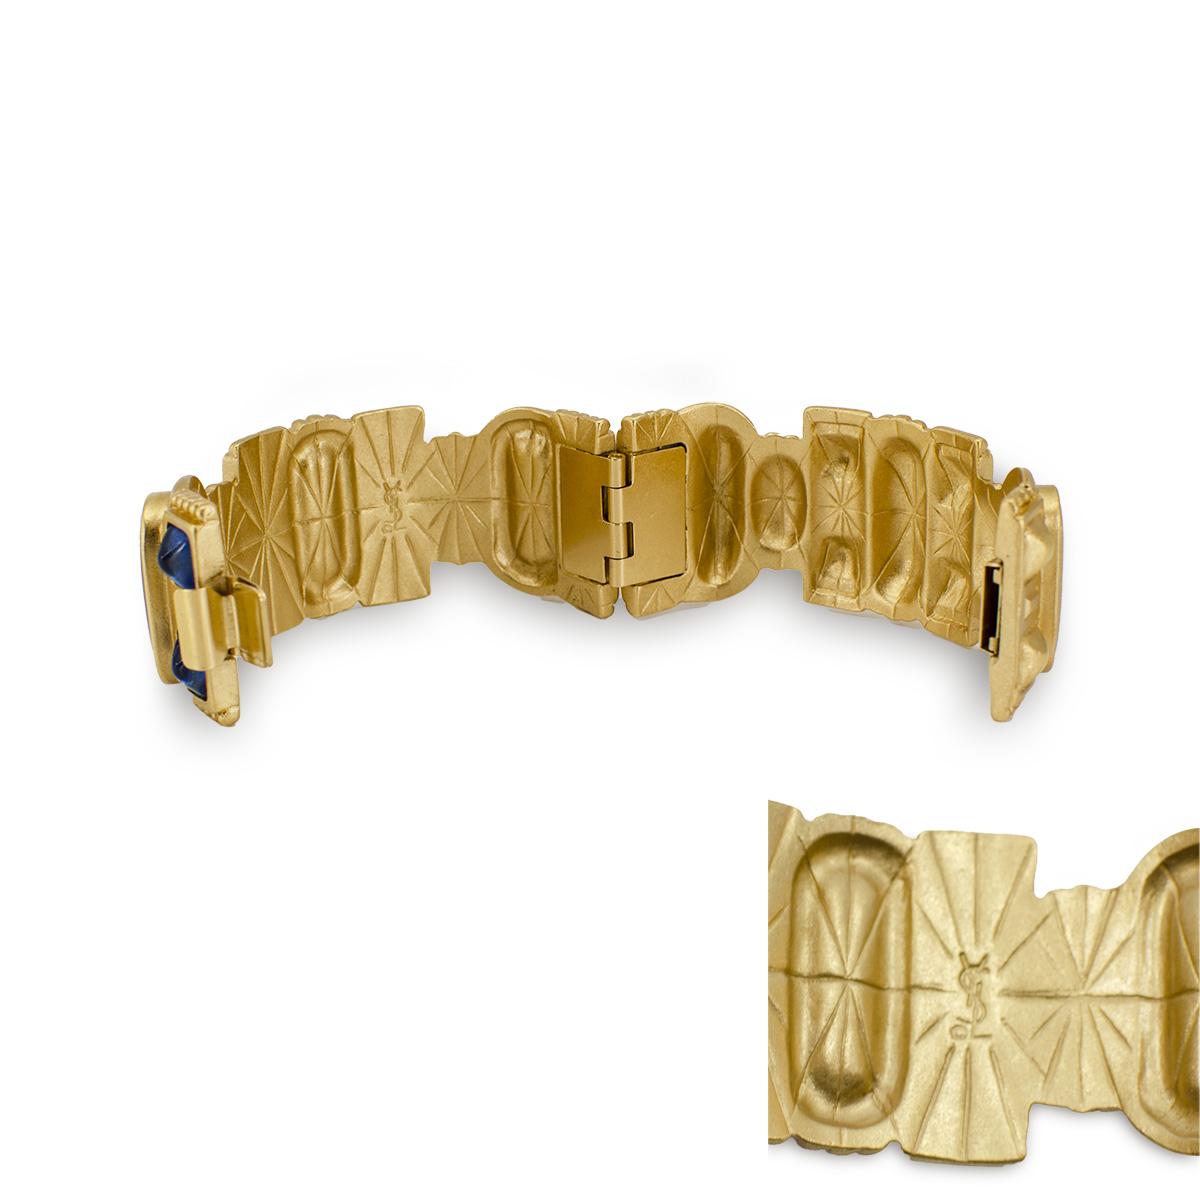 YSL gold bracelet etruscan revival jewelry